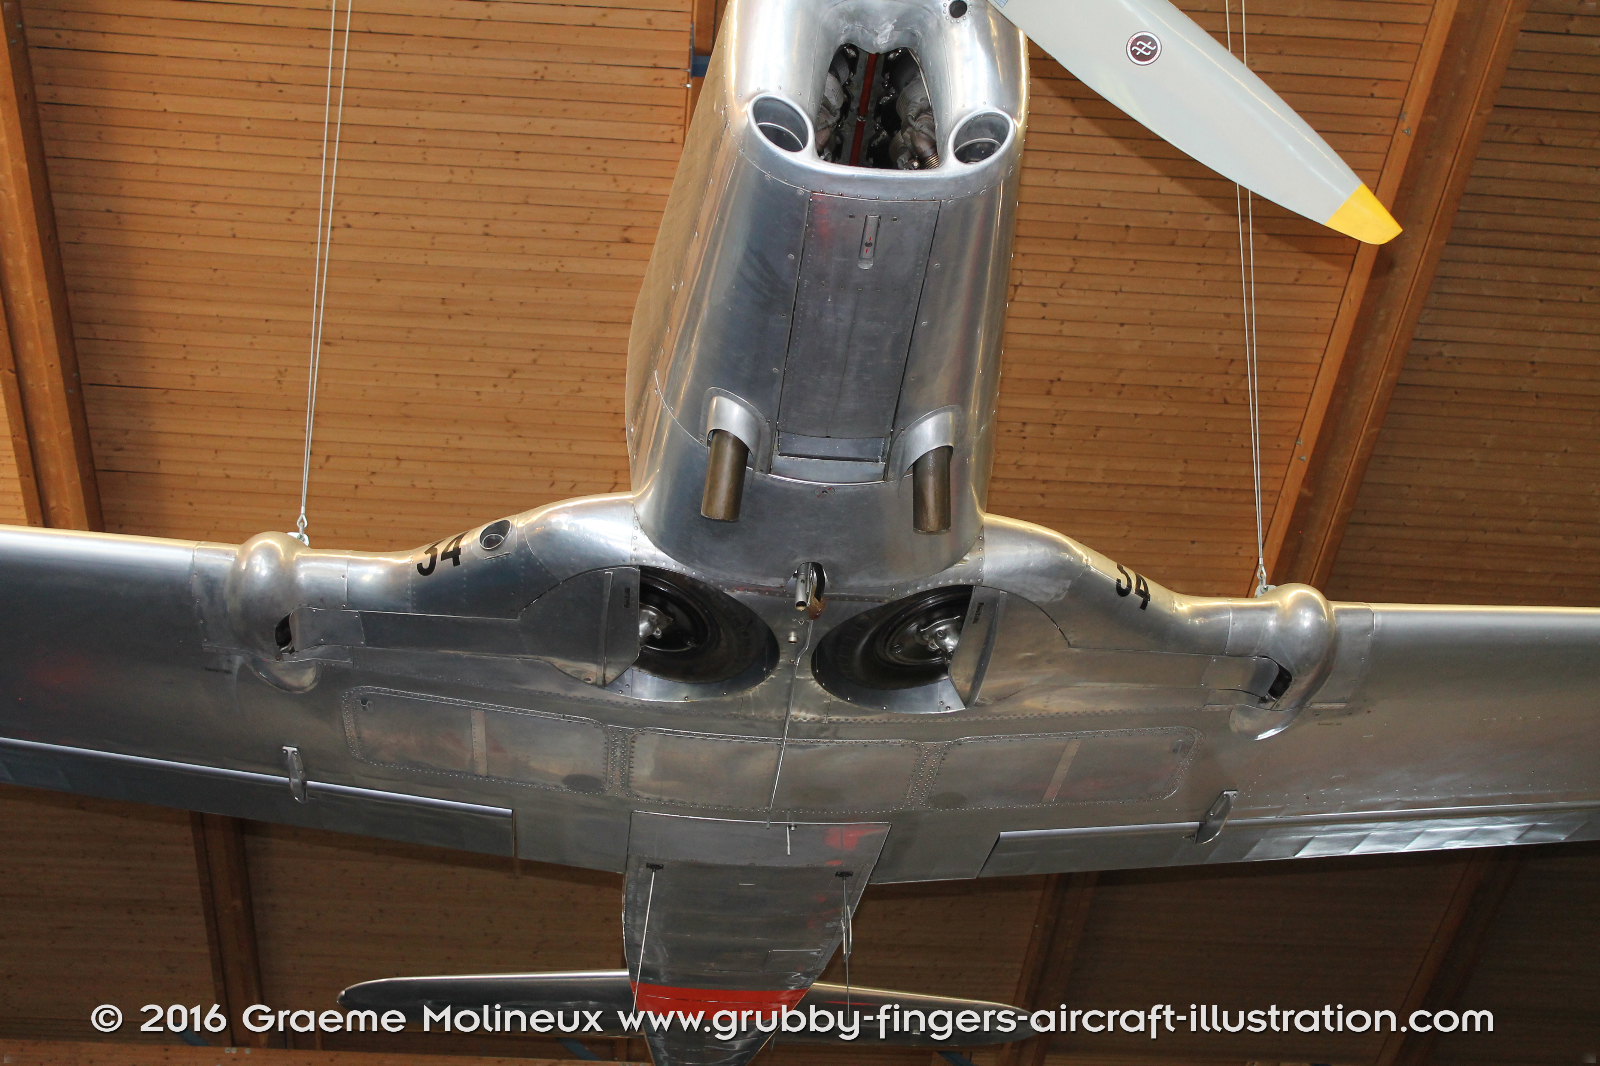 PILATUS_P-2_U-134_Swiss_Air_Force_Museum_2015_15_GrubbyFingers